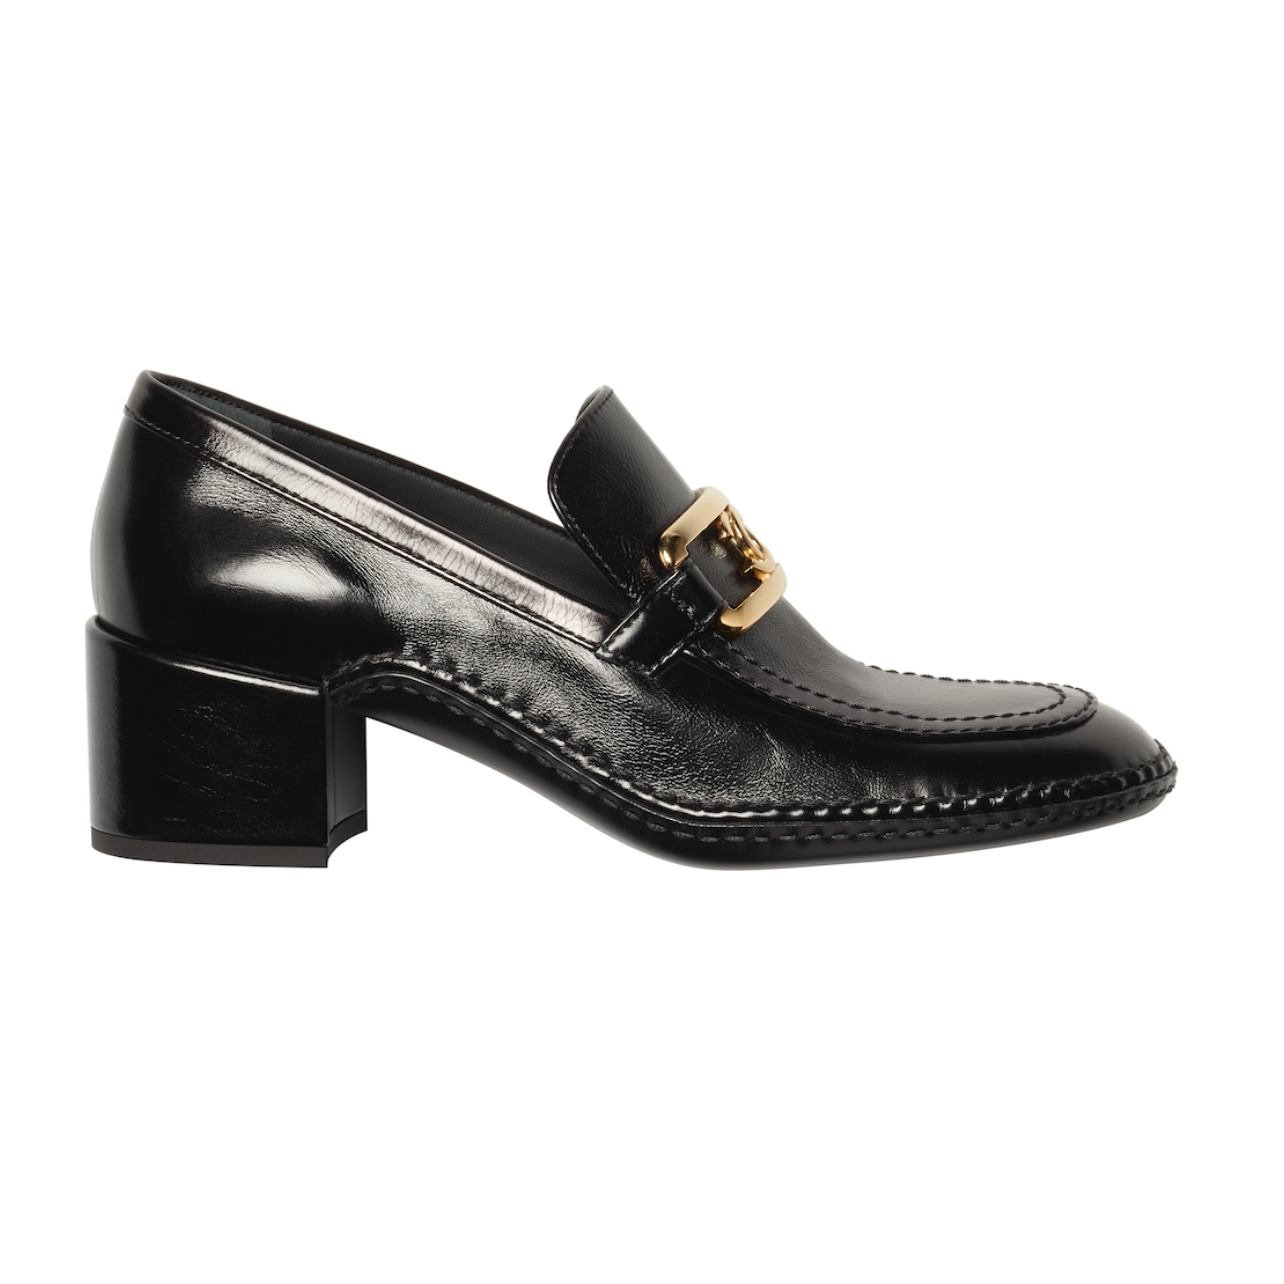 Black heeled loafer with gold hardware